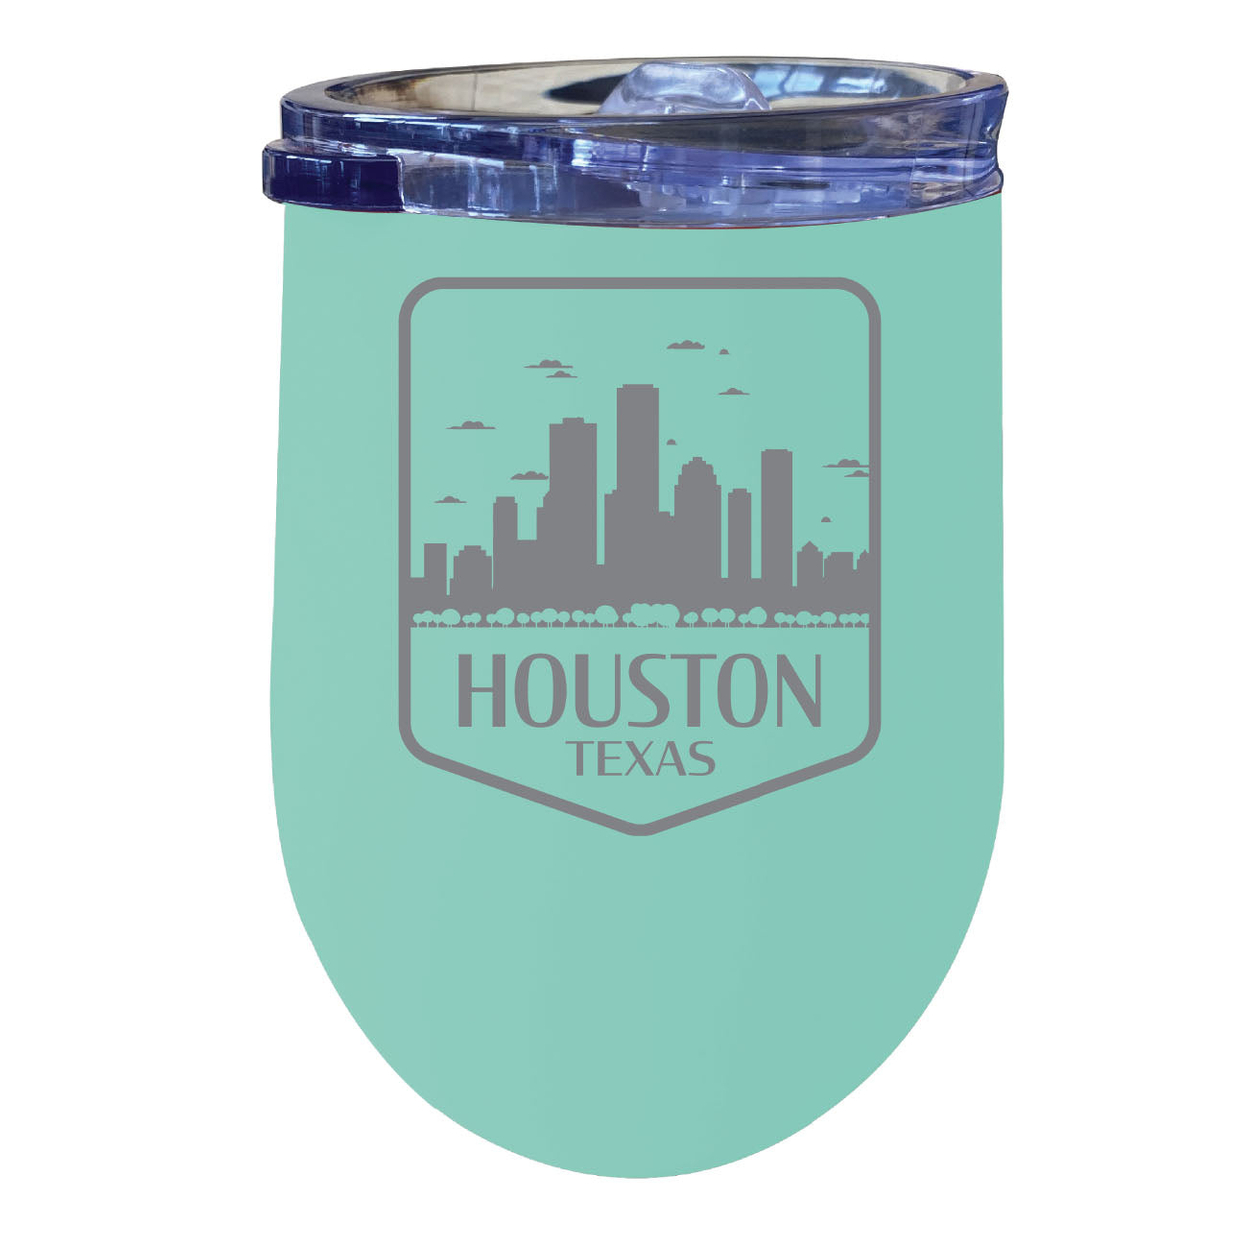 Houston Texas Souvenir 12 Oz Engraved Insulated Wine Stainless Steel Tumbler - Seafoam,,2-Pack